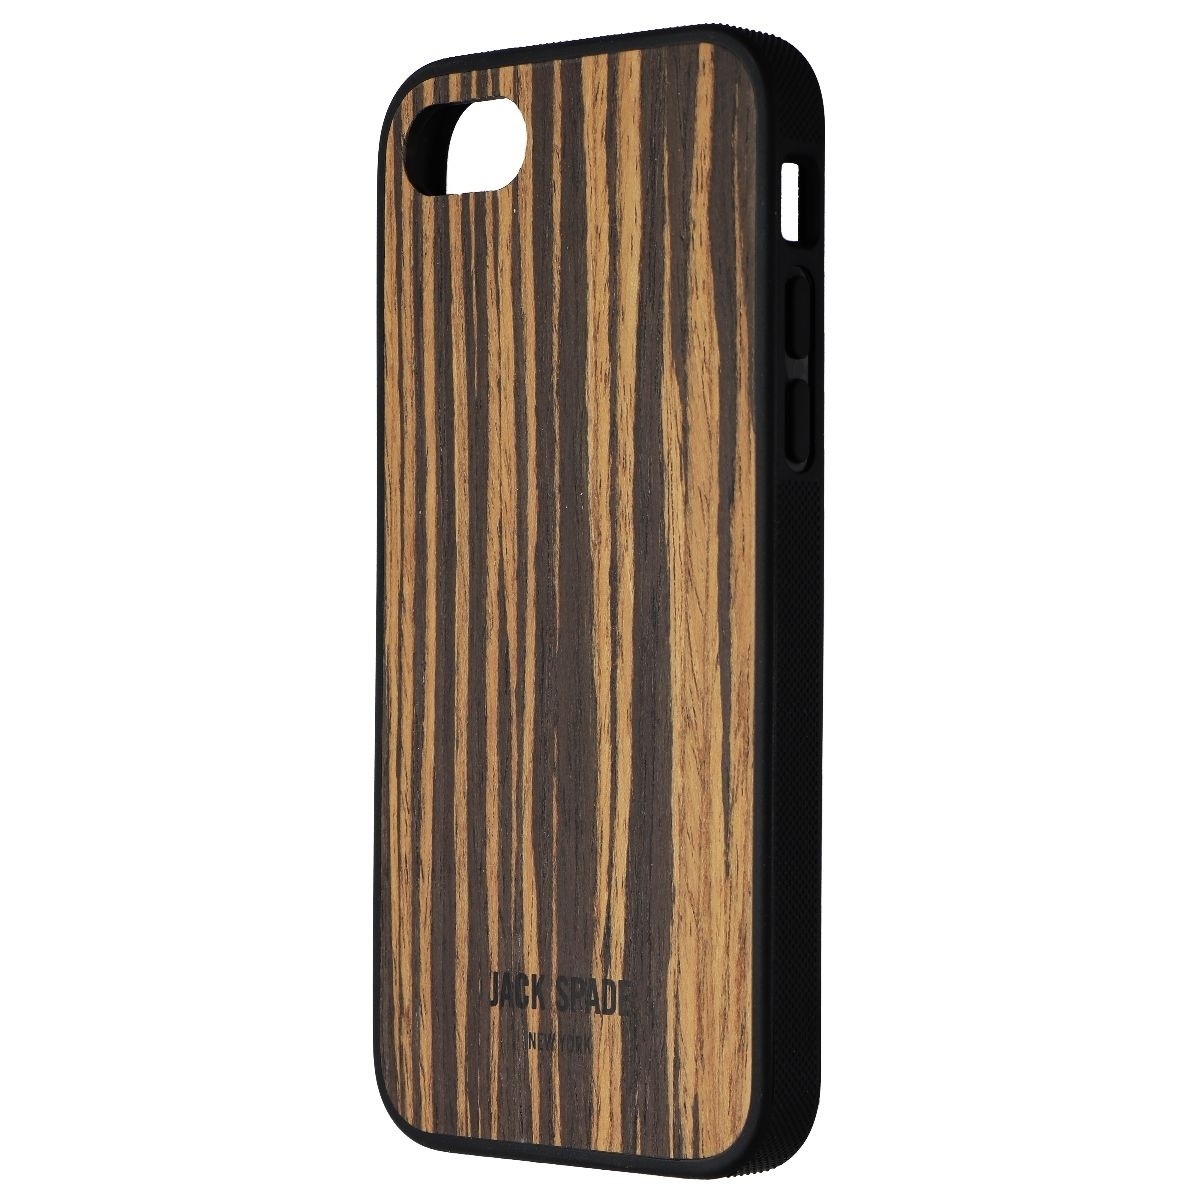 Jack Spade New York Wood Case For Apple IPhone 7 - Brown/Black (Refurbished)